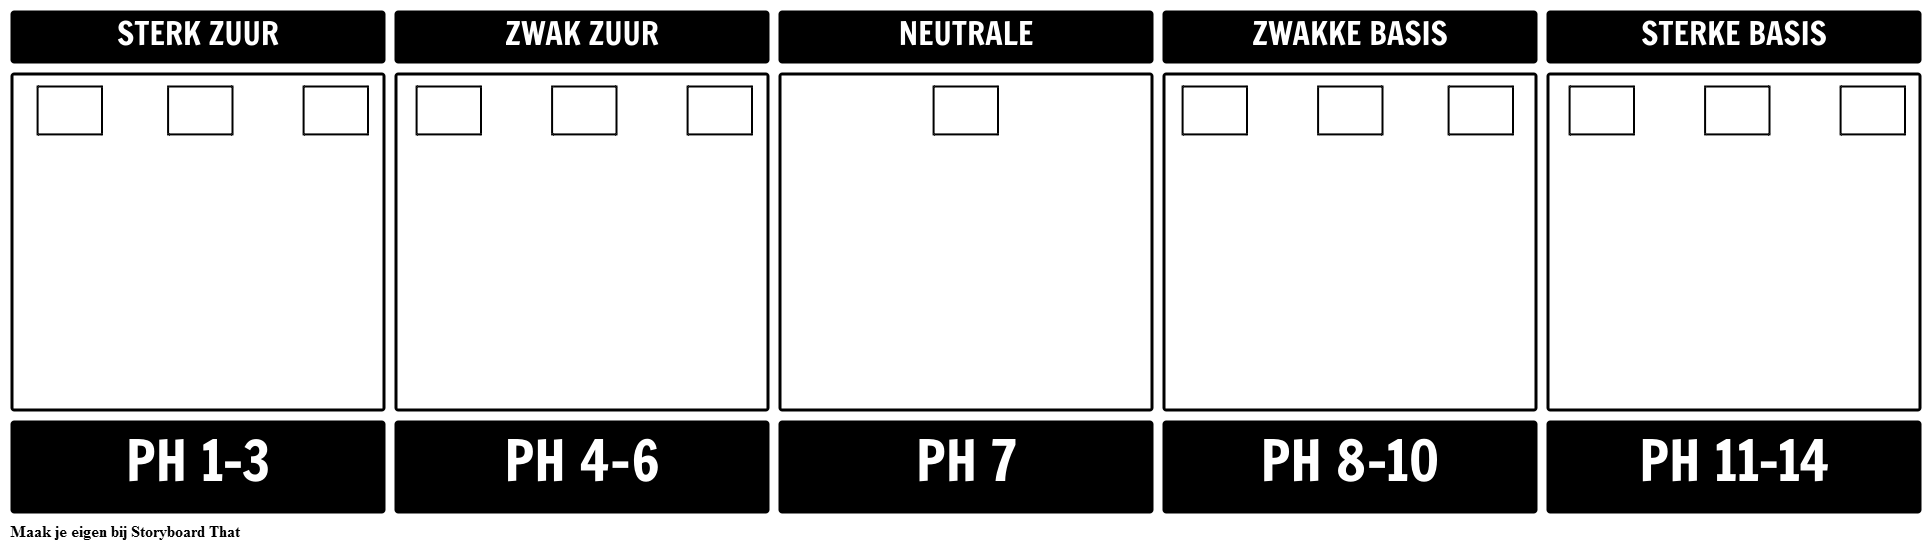 Template Scale pH